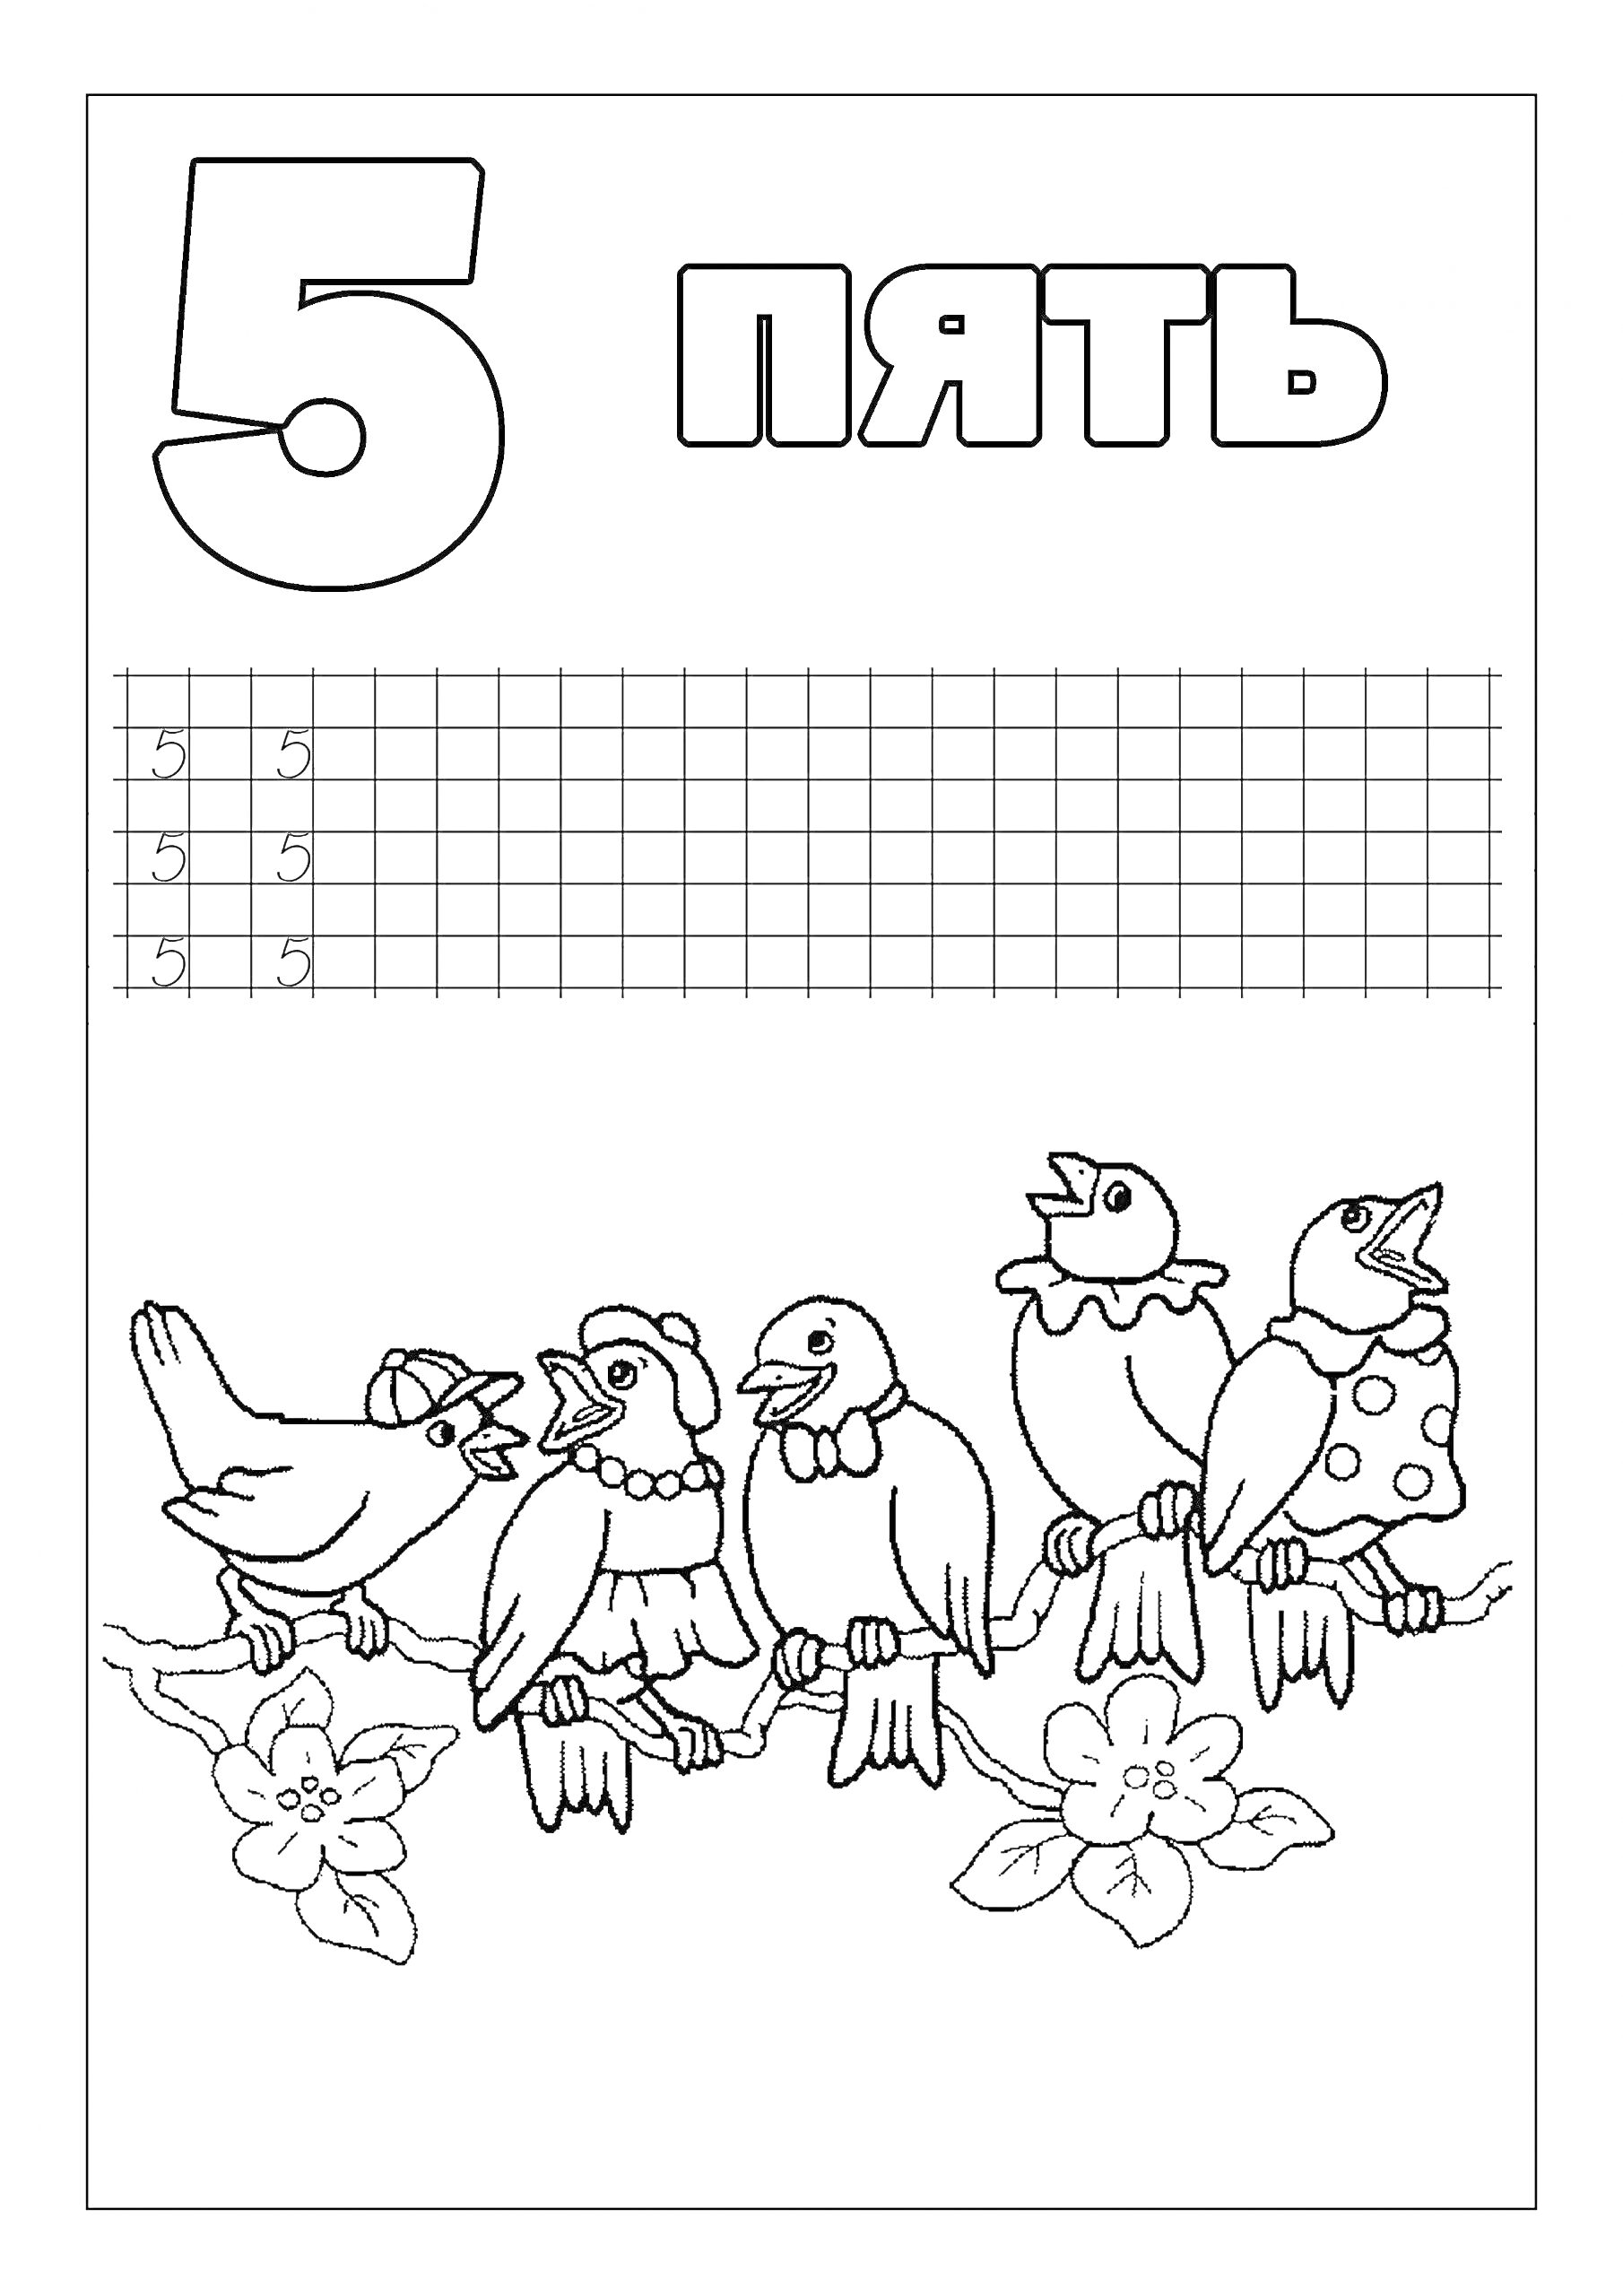 Раскраска Цифра 5 с пятью птицами на ветке, цветами и таблицей для написания цифры 5